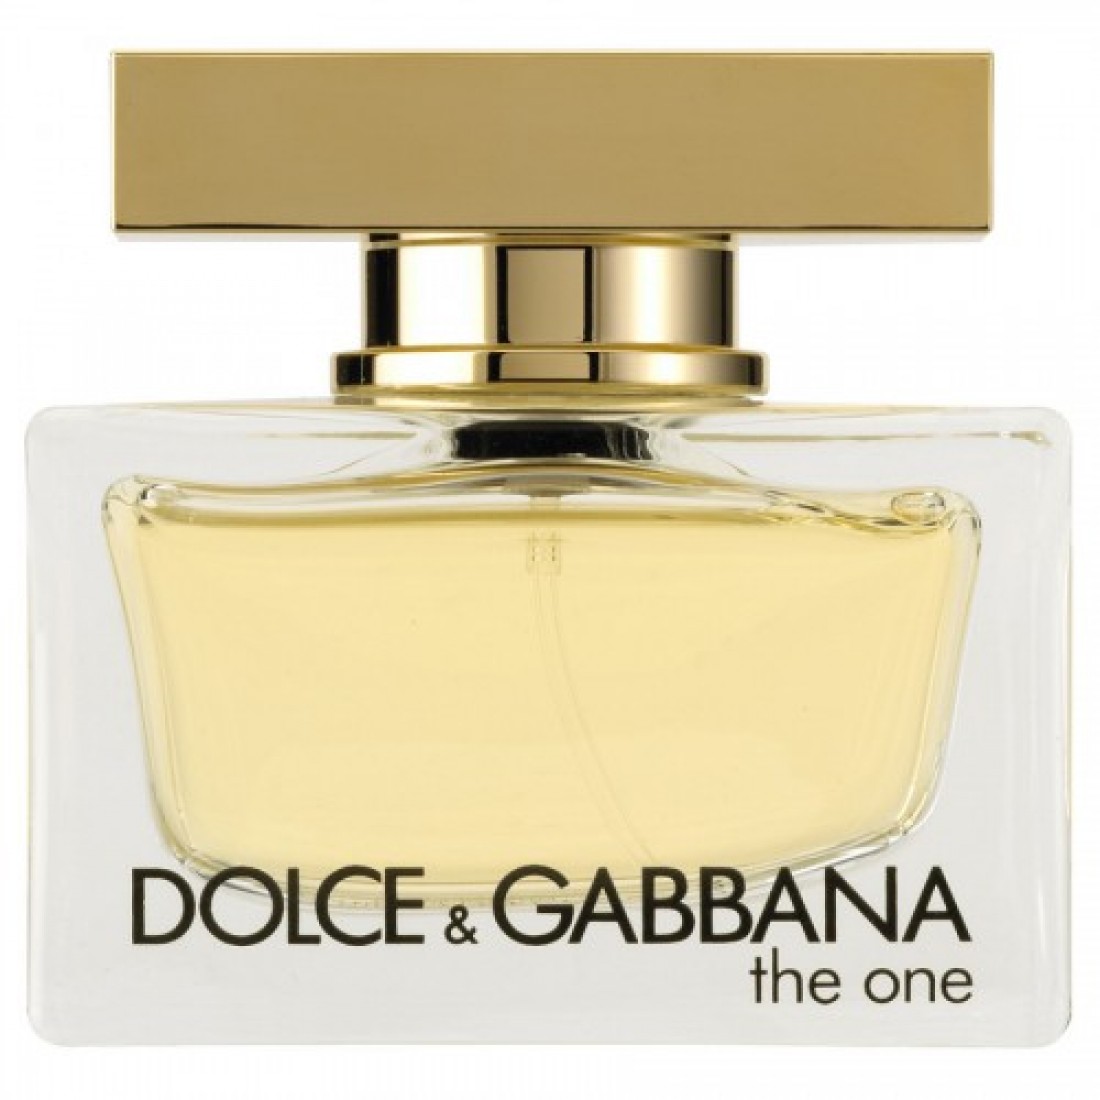 Дольче габбана the one купить. Dolce & Gabbana the one, EDP, 75 ml. Dolce Gabbana the one 75. Духи Дольче Габбана зе Ван. Dolce Gabbana the one женские 75 мл.